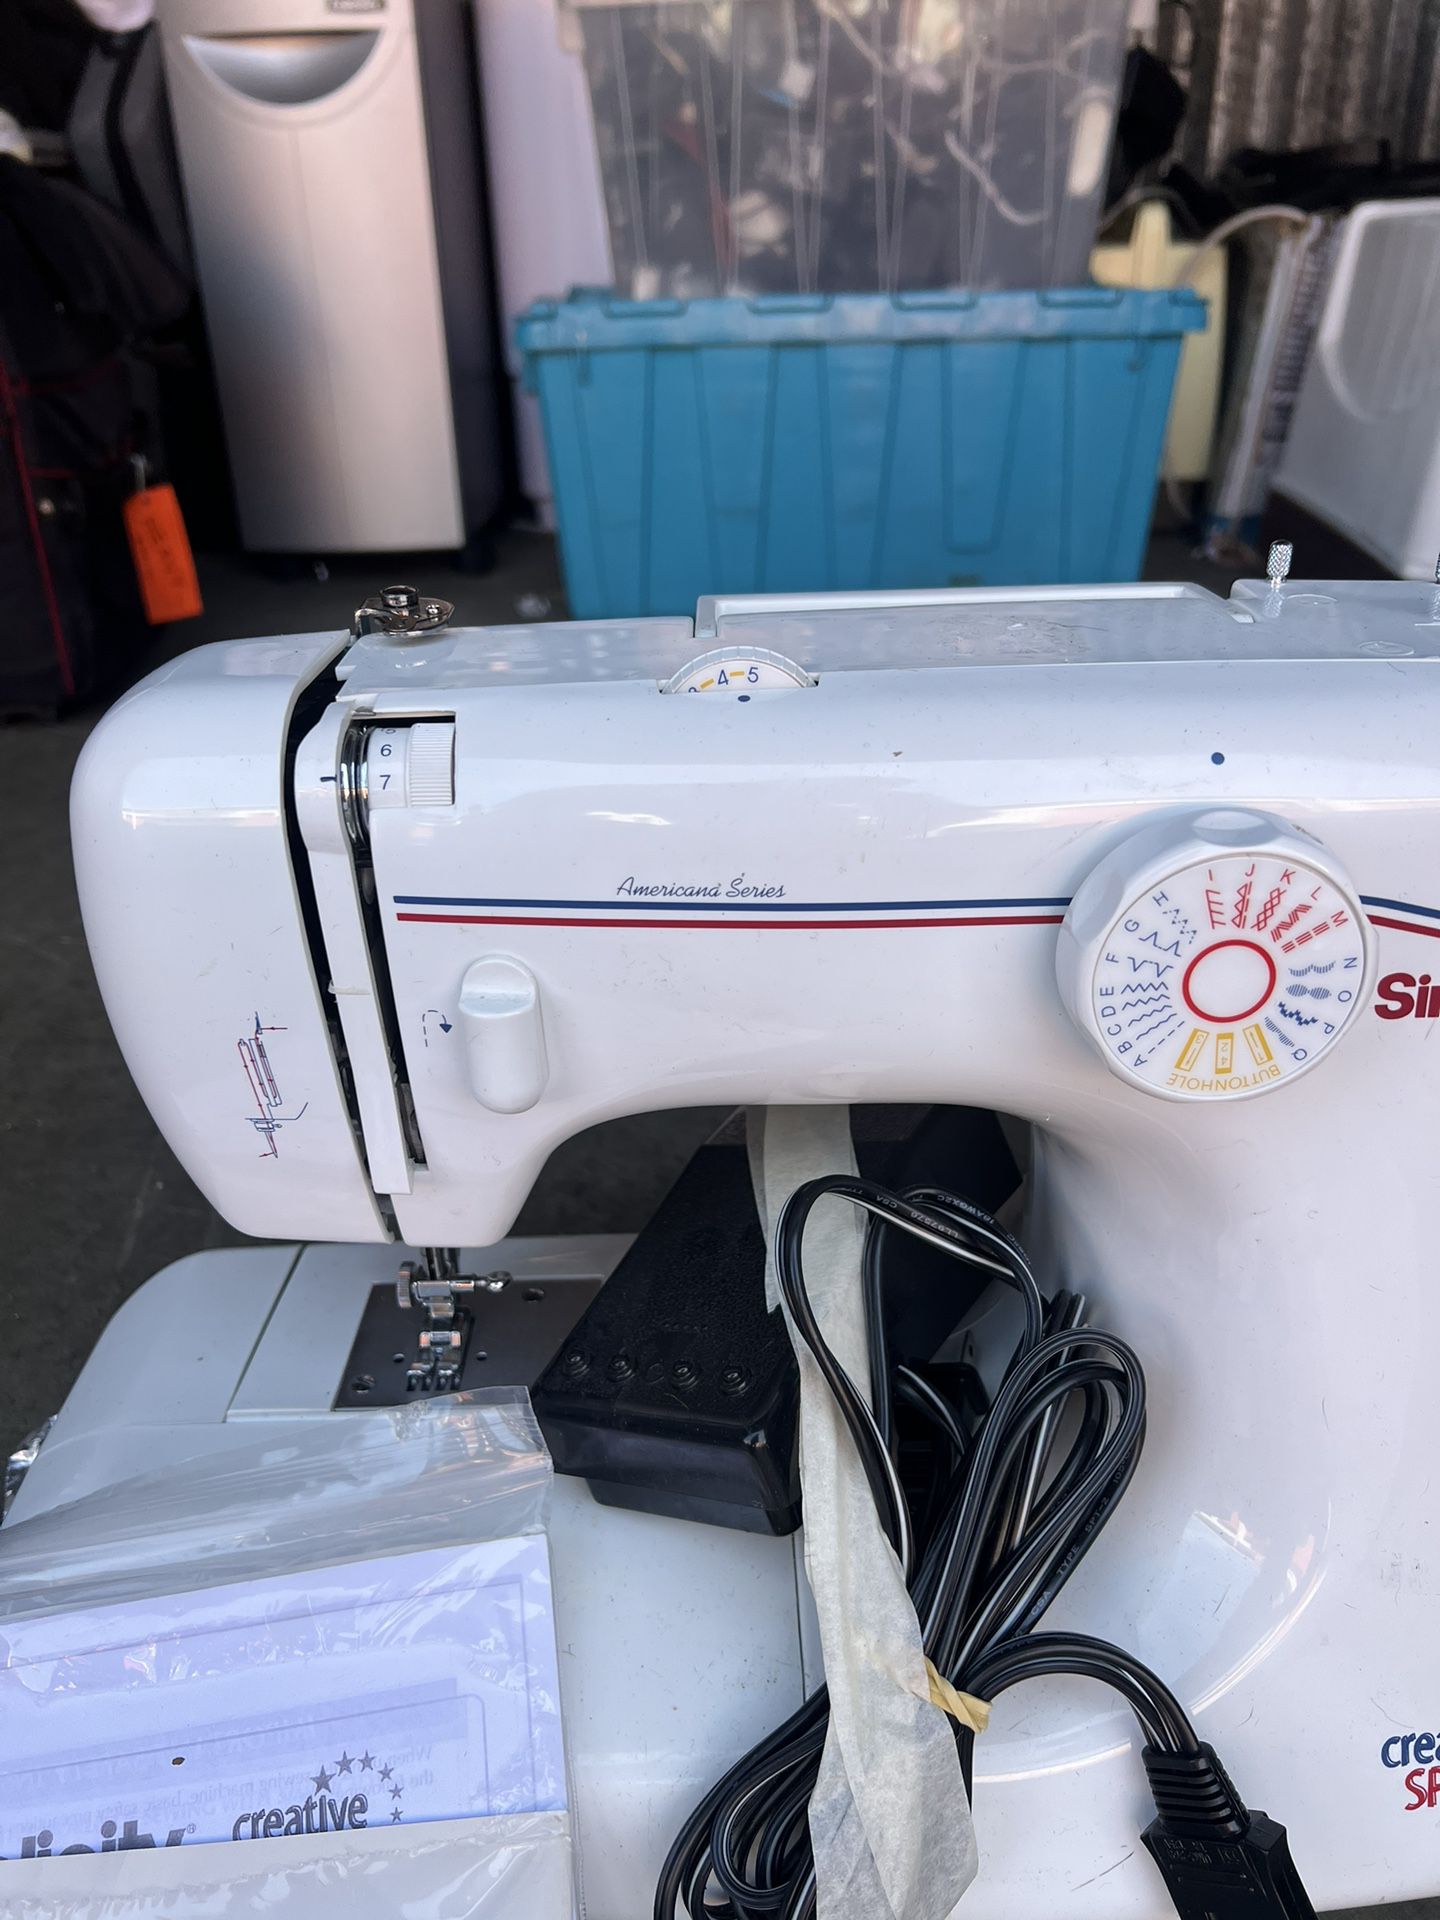 Simplicity Sewing Machine 